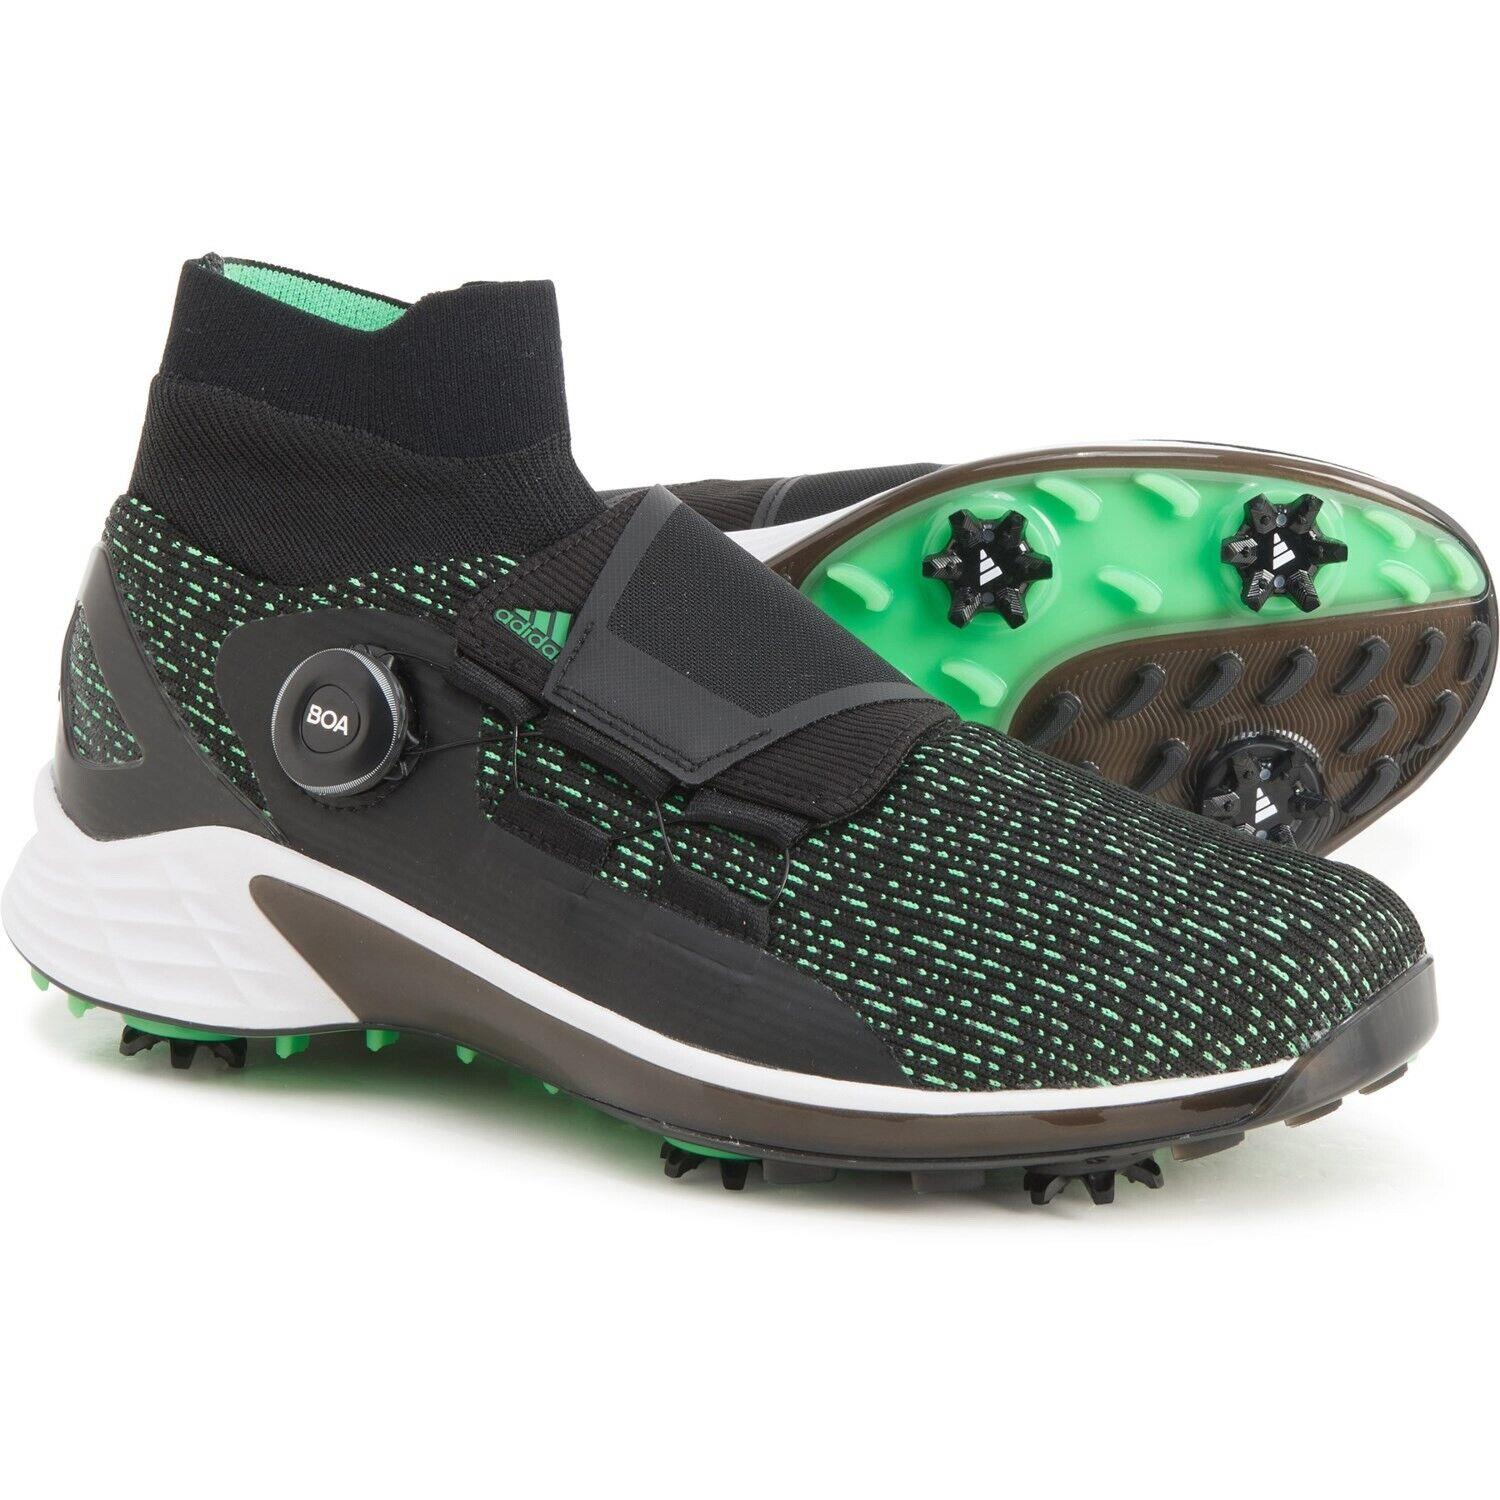 Adidas ZG21 Motion Boa Waterproof Golf Shoe Black Green Wht Boost 14 H68592